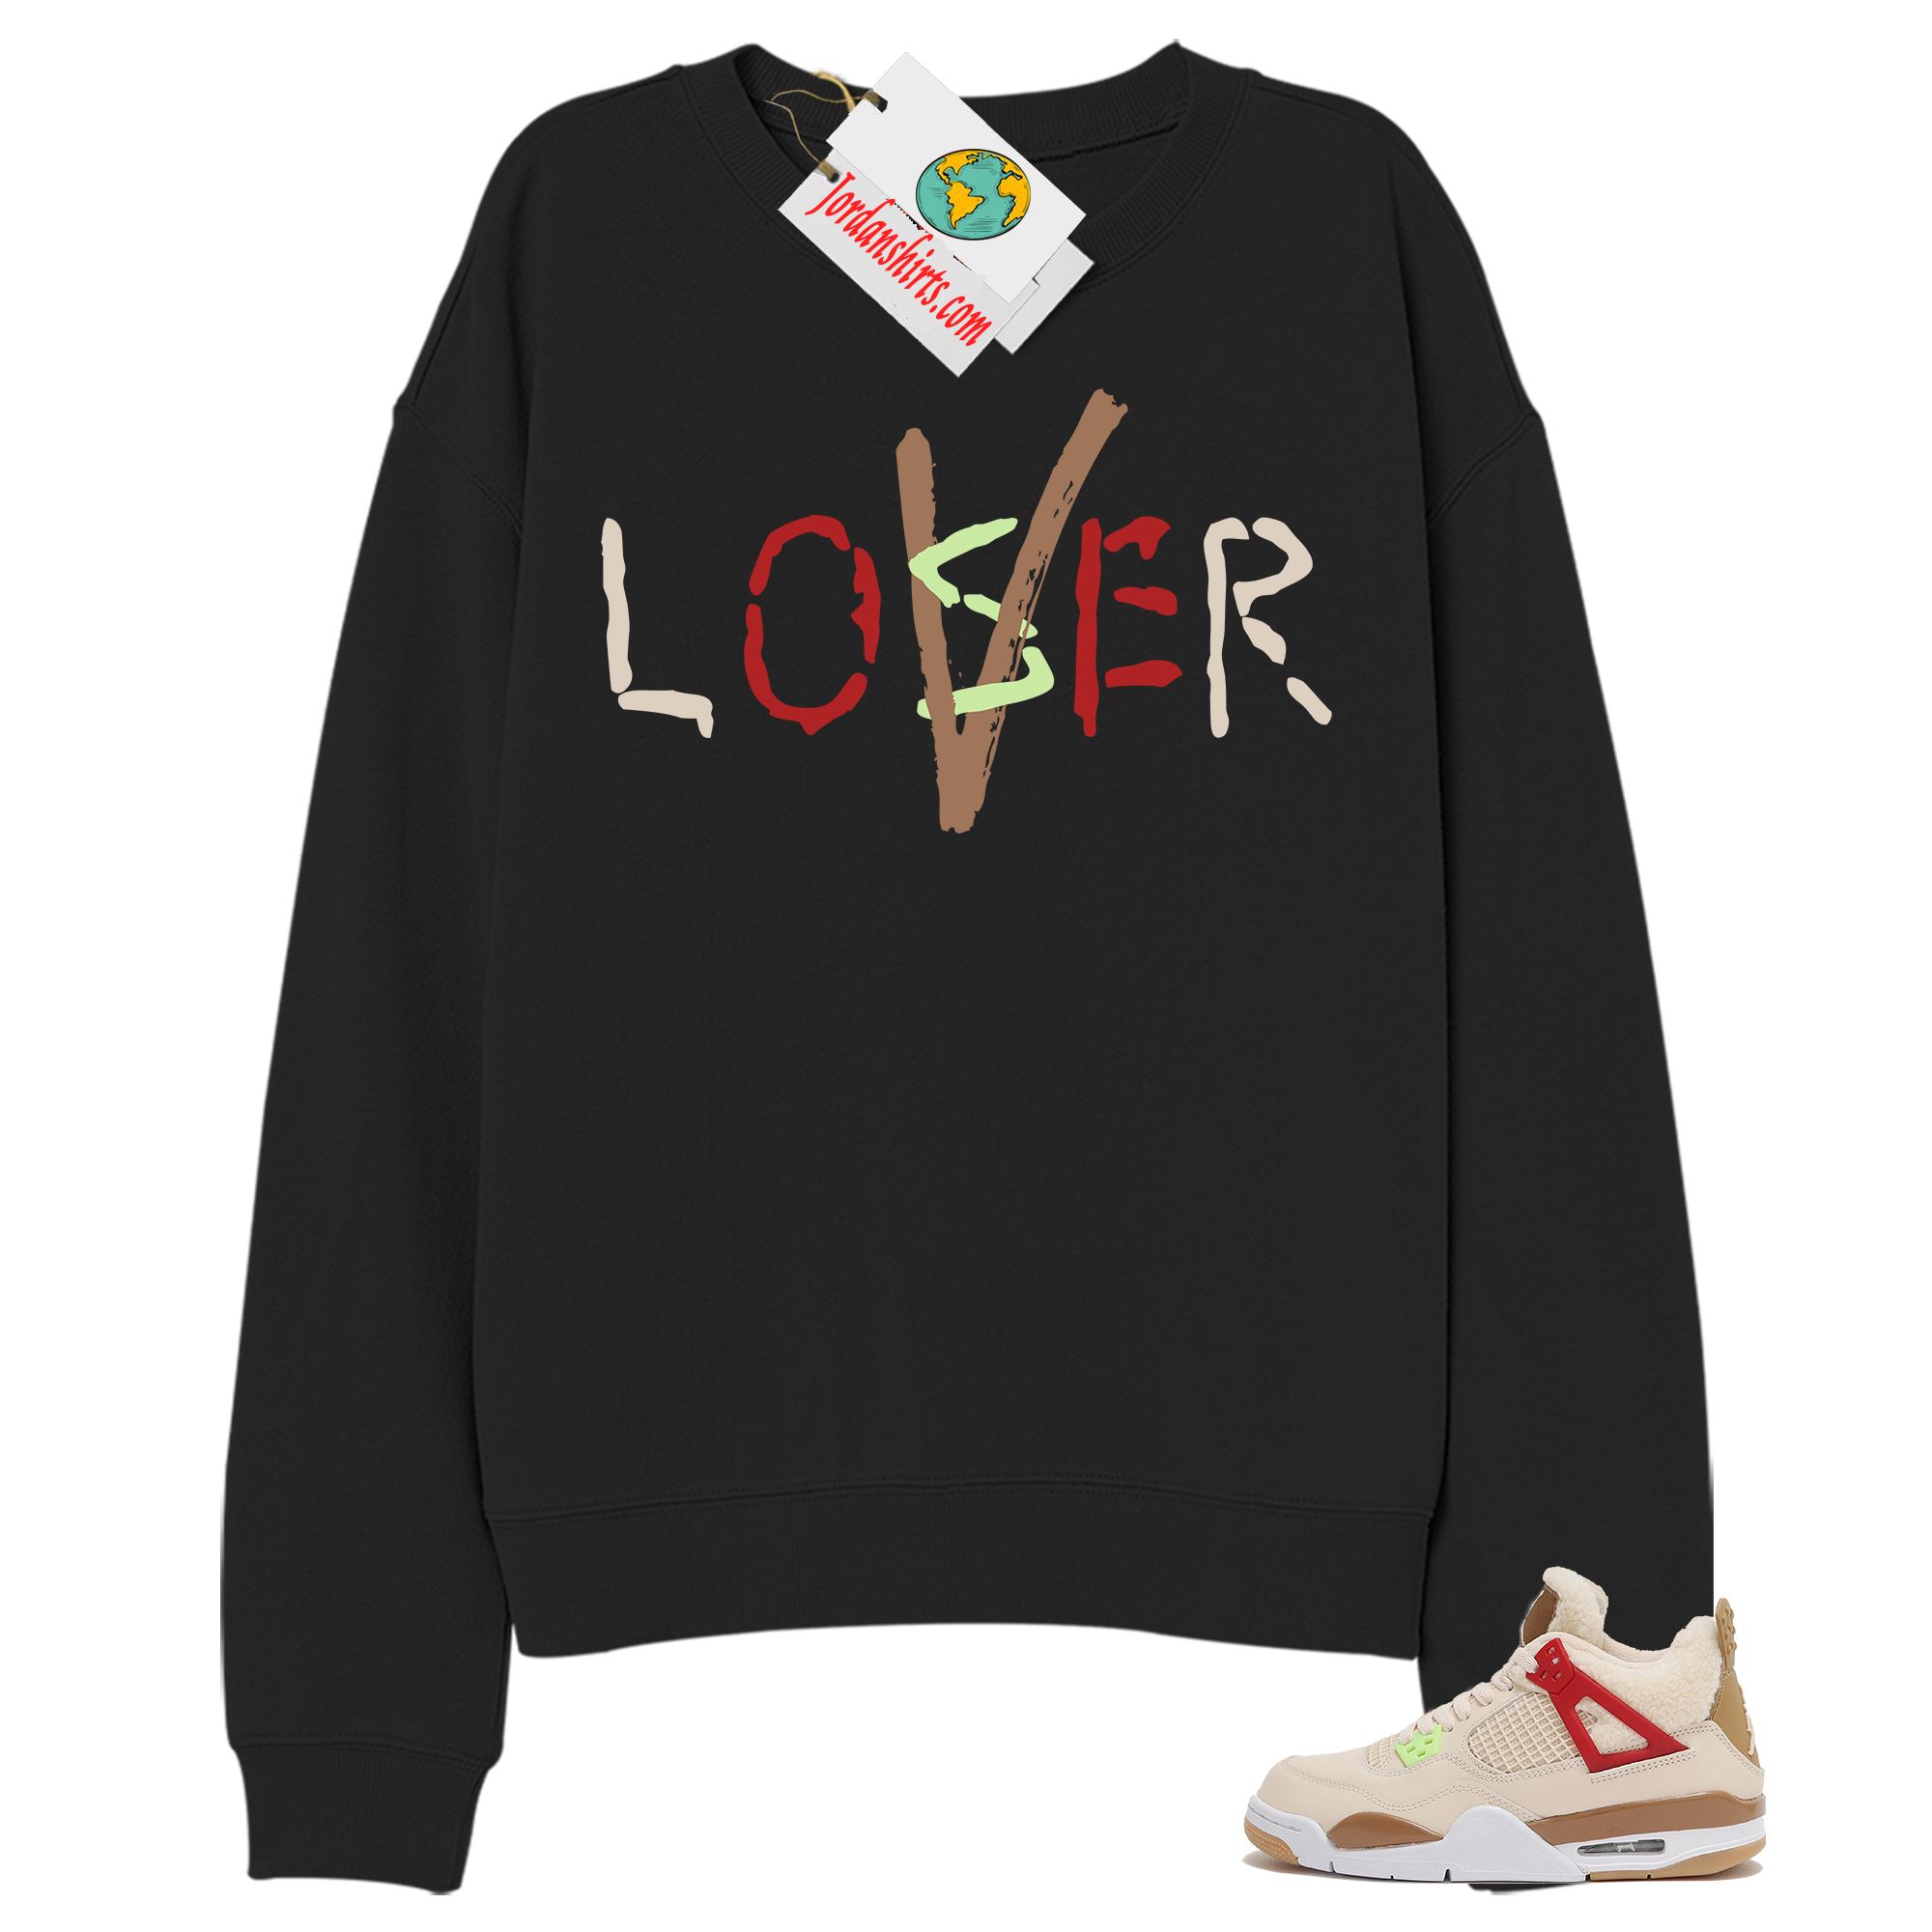 Jordan 4 Sweatshirt, Love A Loser Black Sweatshirt Air Jordan 4 Wild Things 4s Size Up To 5xl